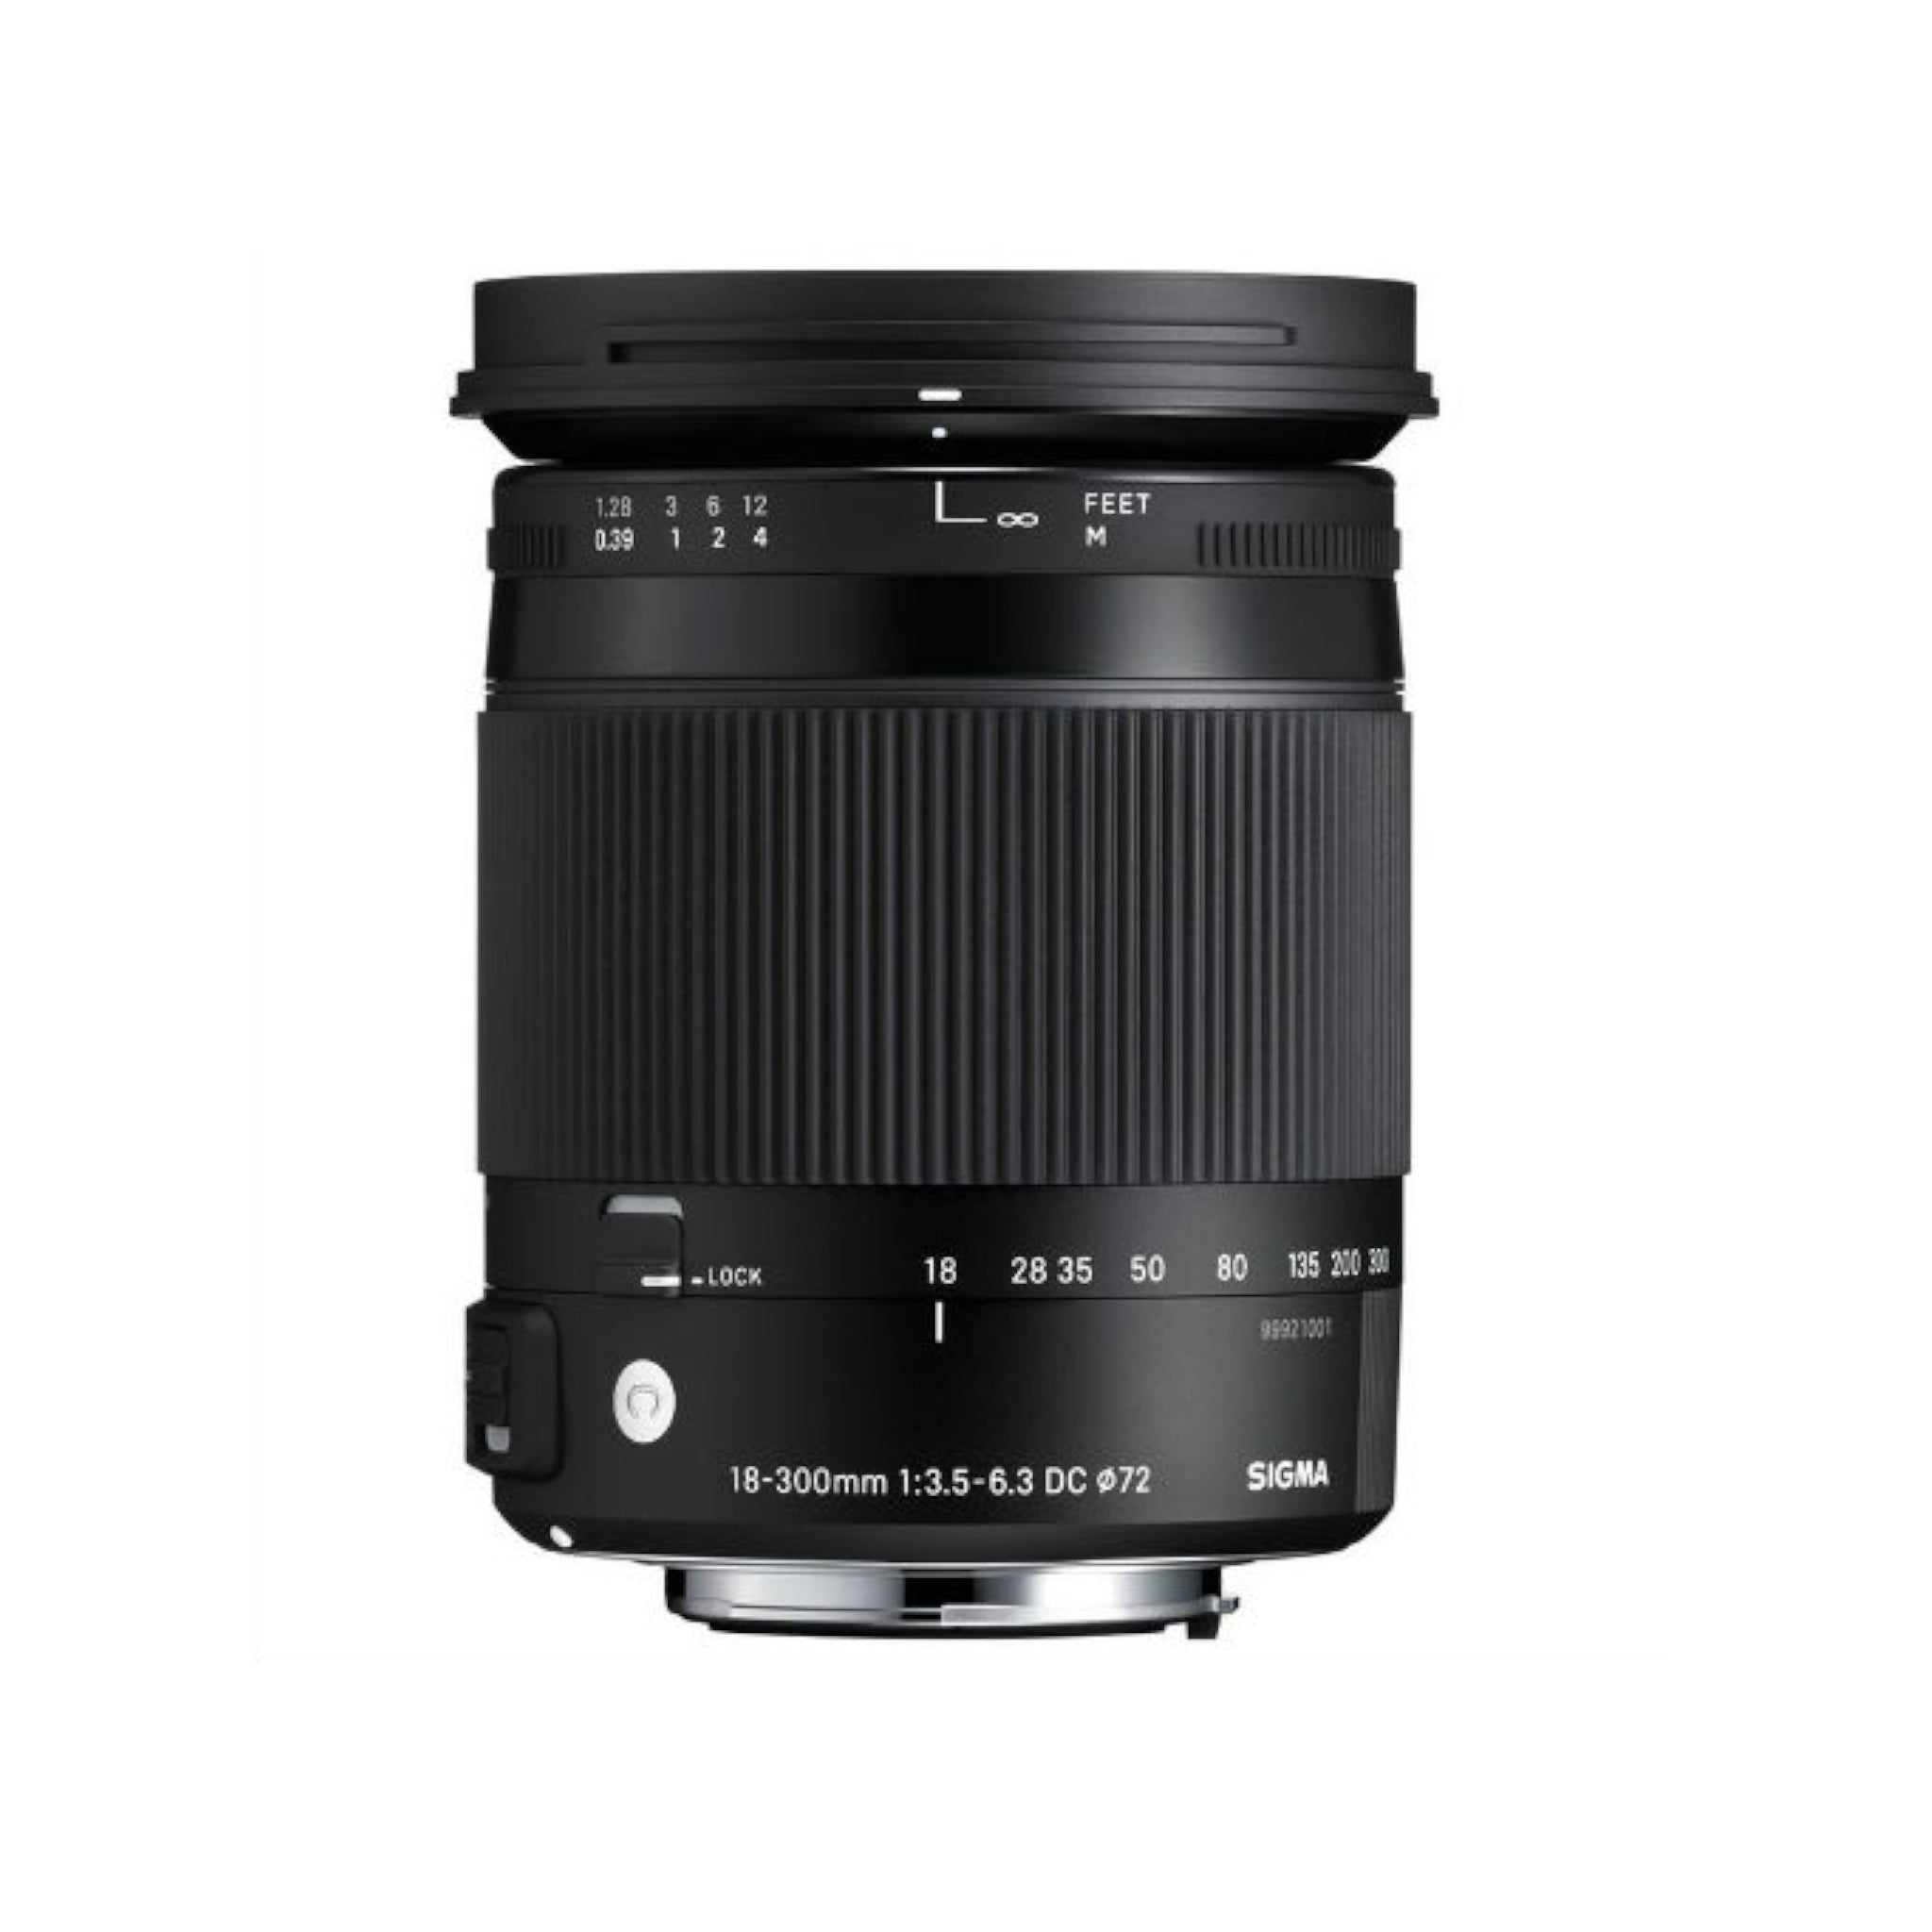 Sigma 18-300mm f 3.5-6.3 DC OS HSM Macro (Nikon Mount) lens